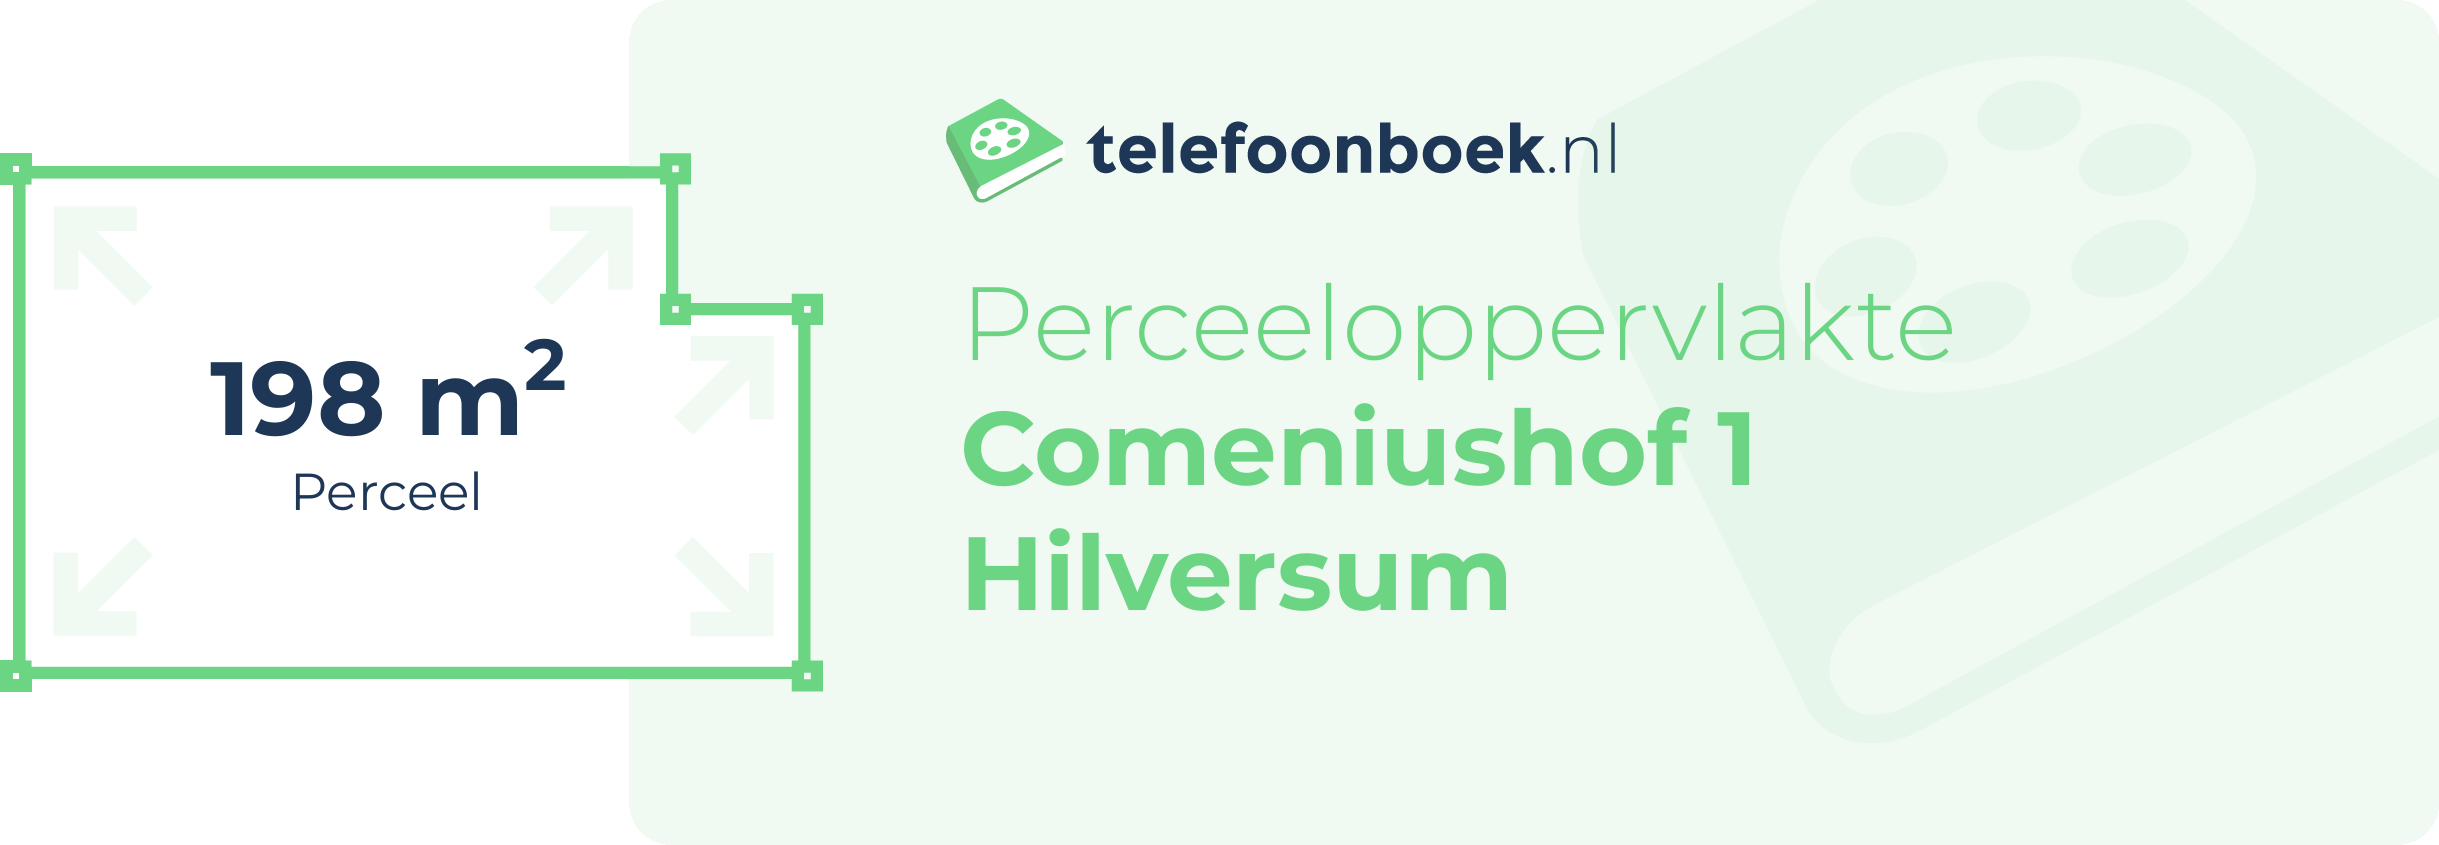 Perceeloppervlakte Comeniushof 1 Hilversum